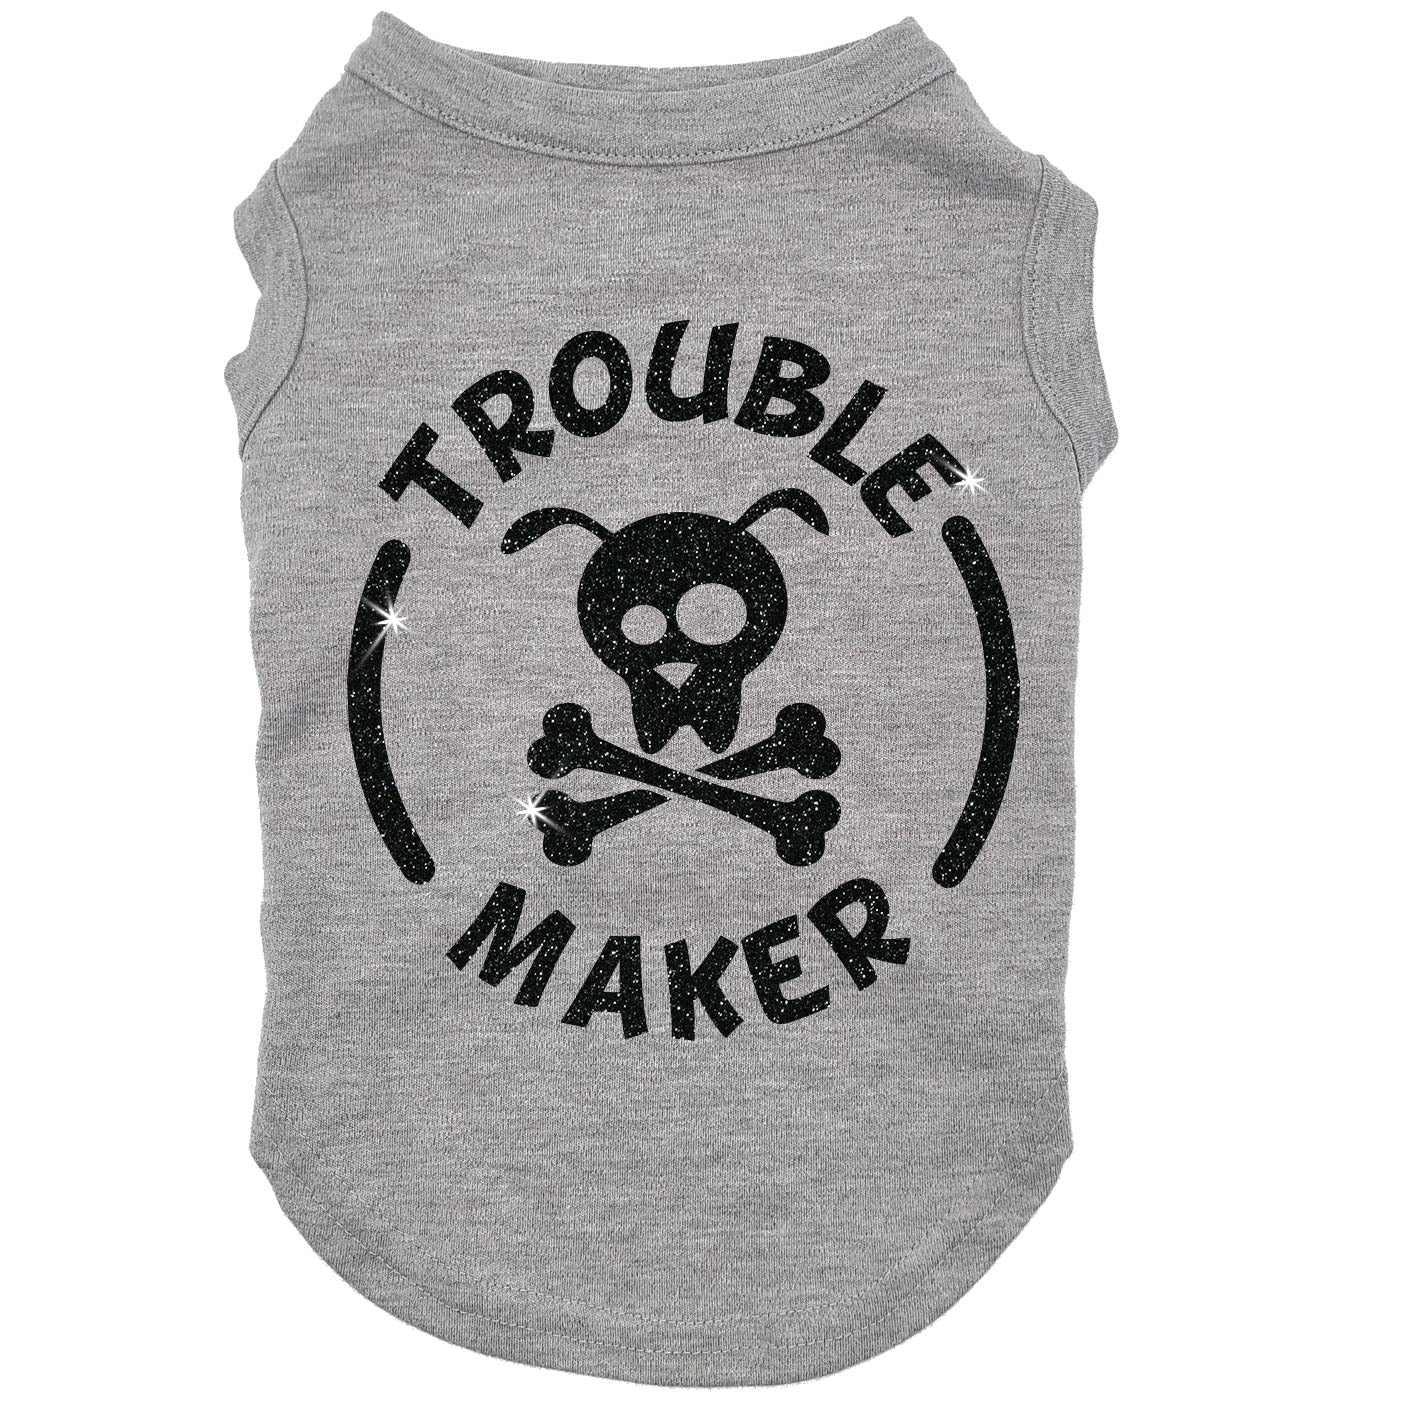 Trouble Maker, dog t-shirt